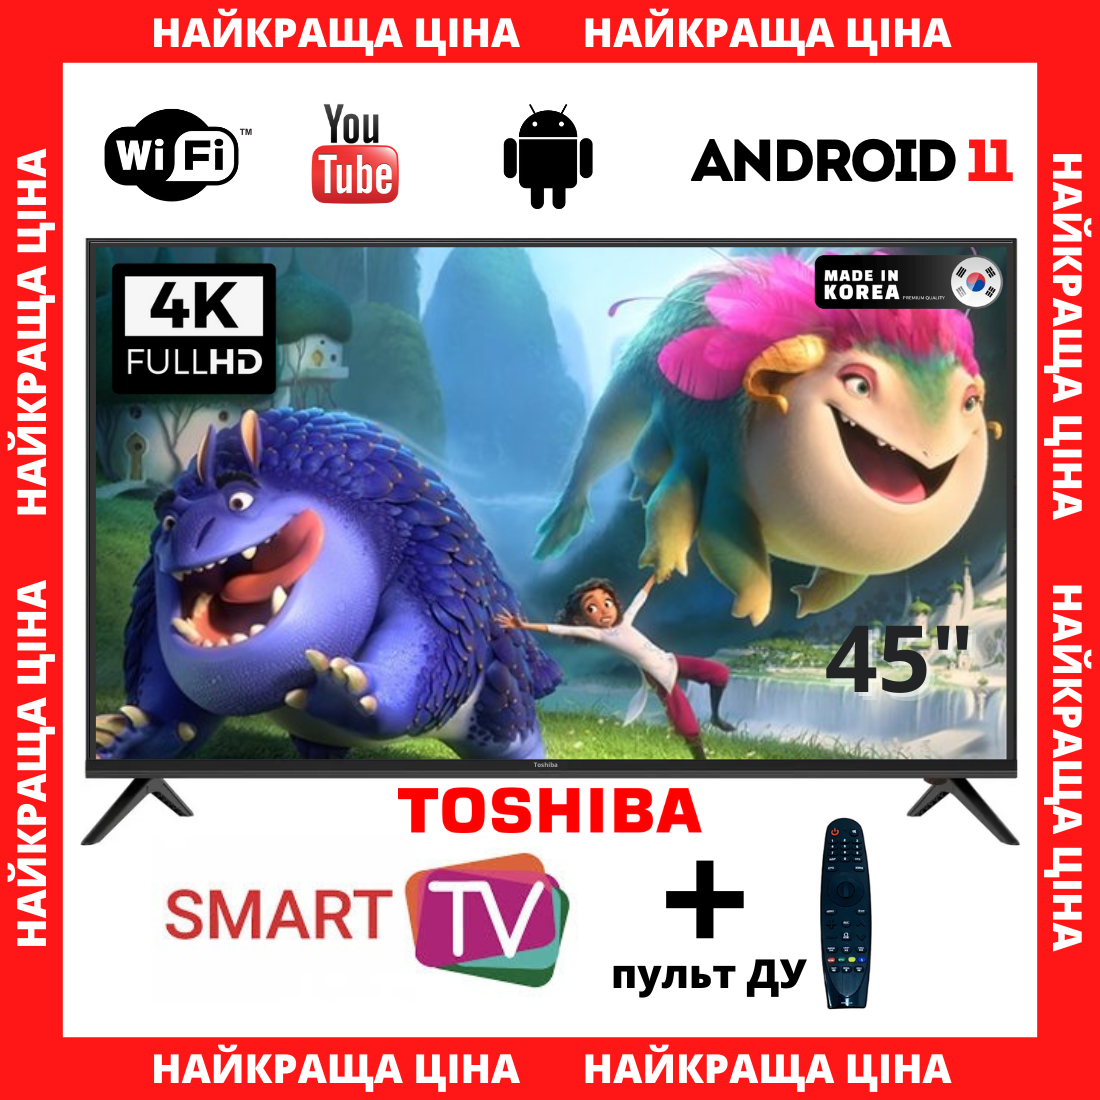 Телевізор Toshiba 45" Smart-TV/Full HD/DVB-T2/USB Android 11 + пульт ДУ